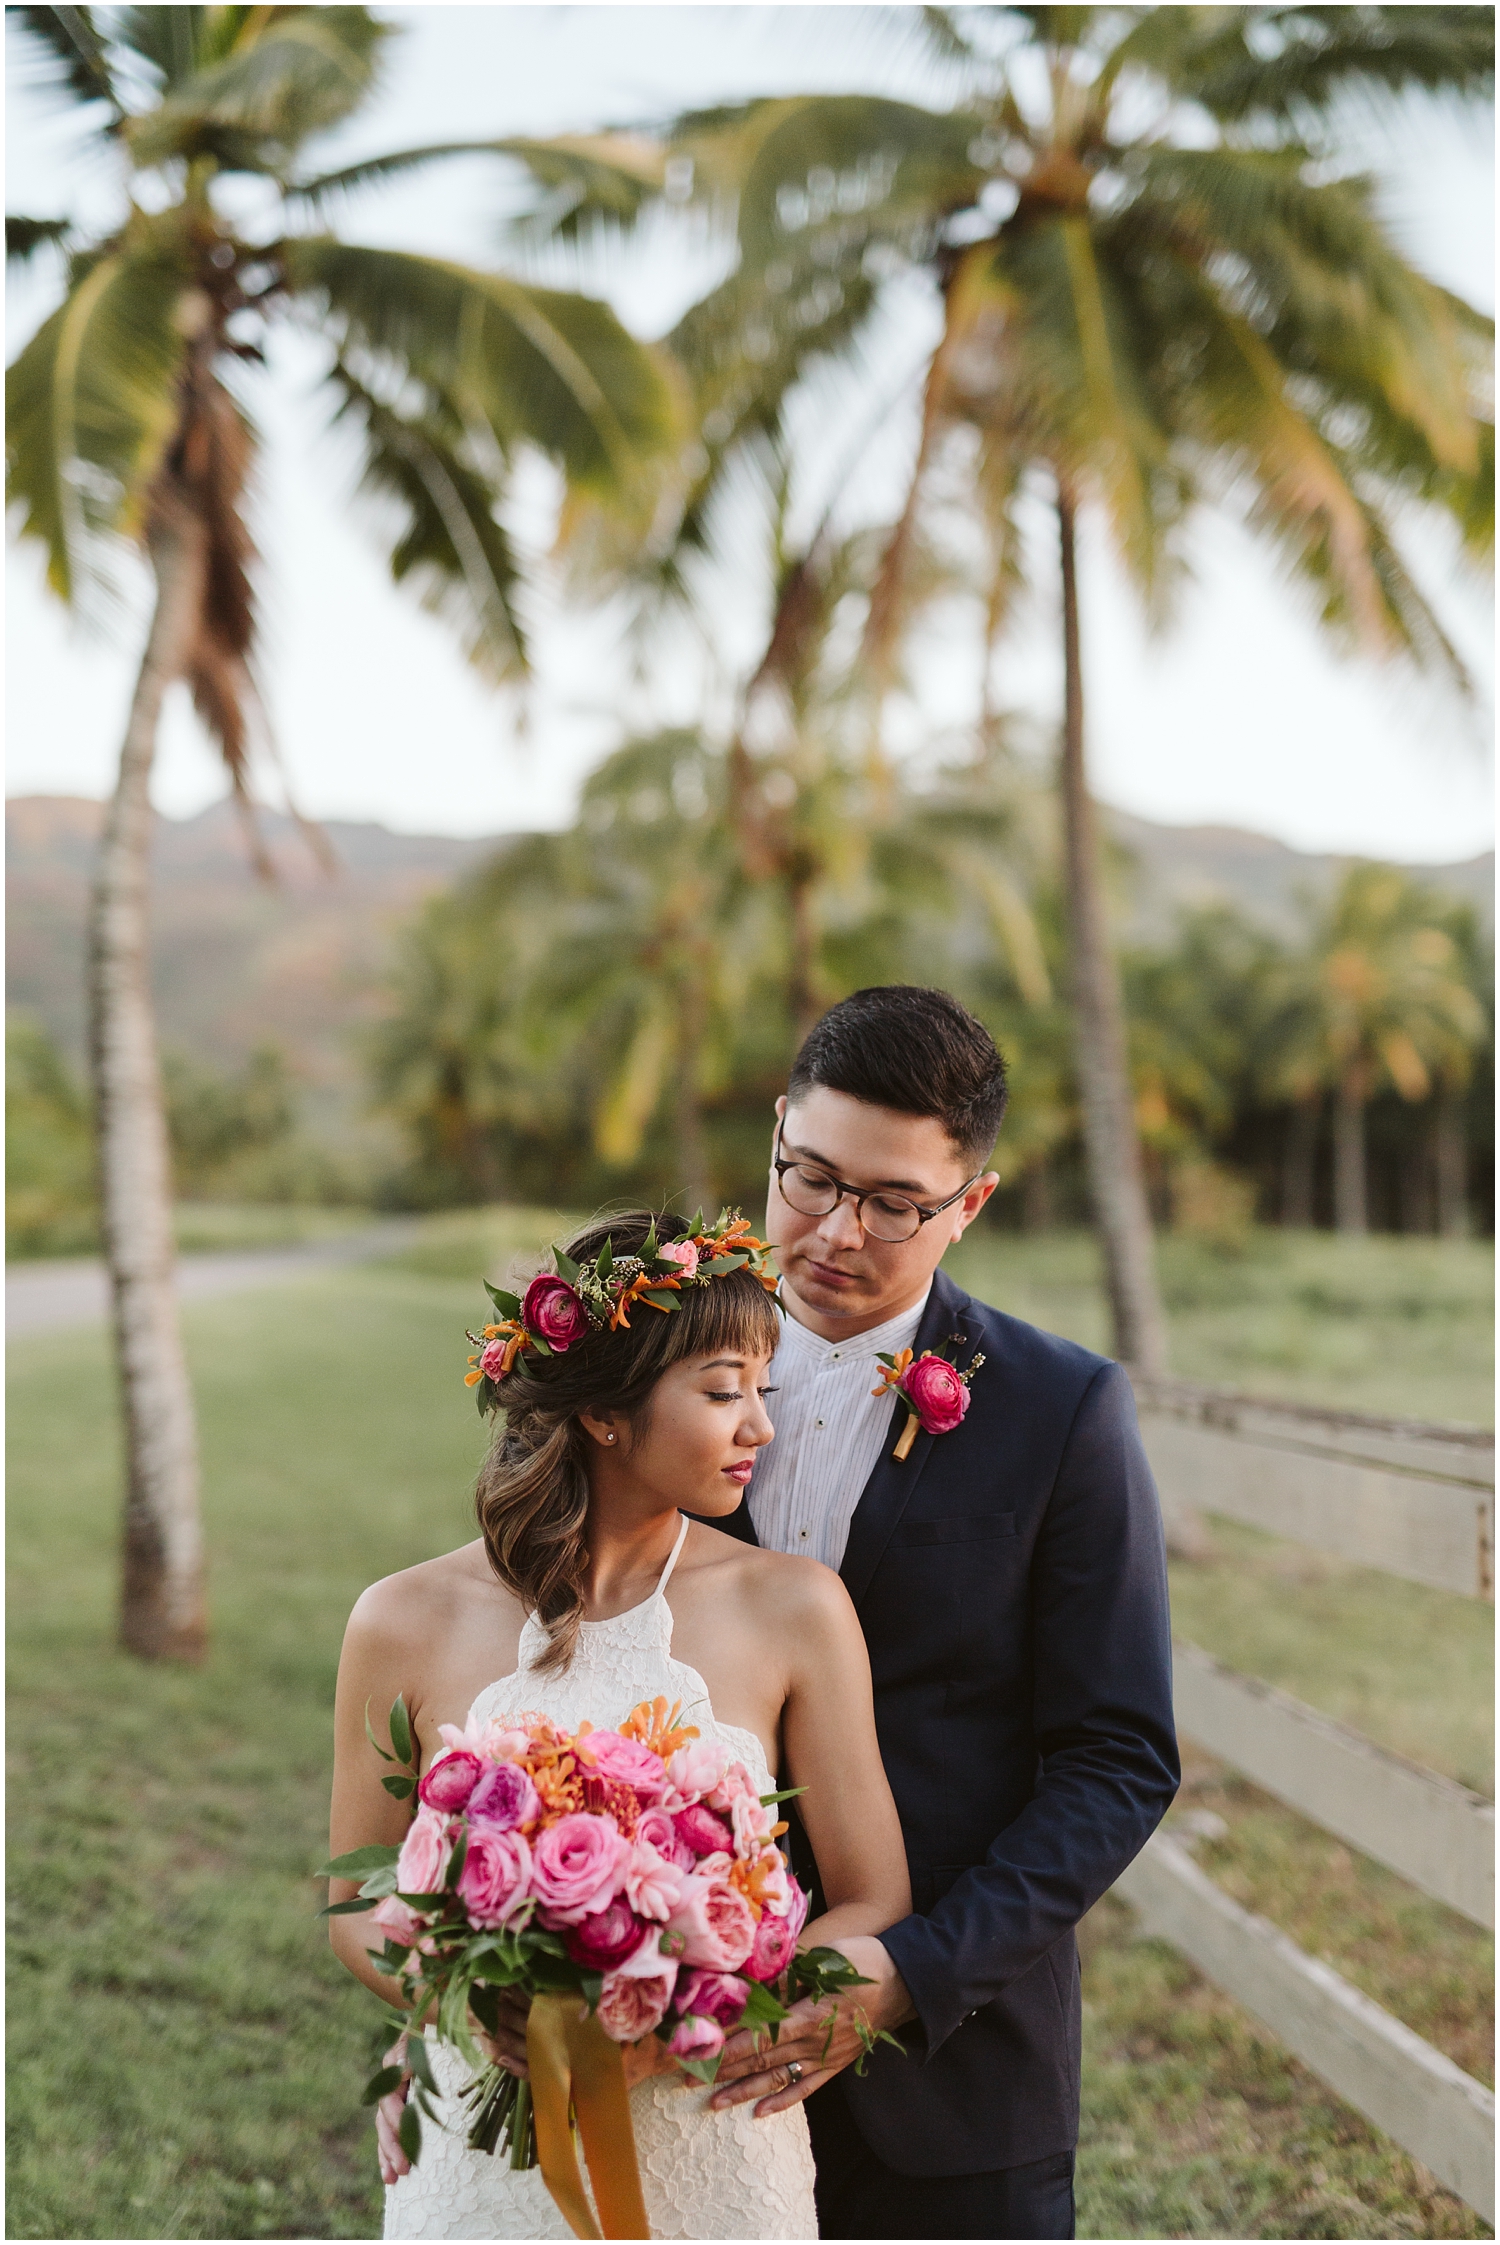 Dillingham Ranch Wedding, Tropical Hawaii Wedding Ceremony, Oahu Hawaii Wedding Ceremony, Hawaii Elopement